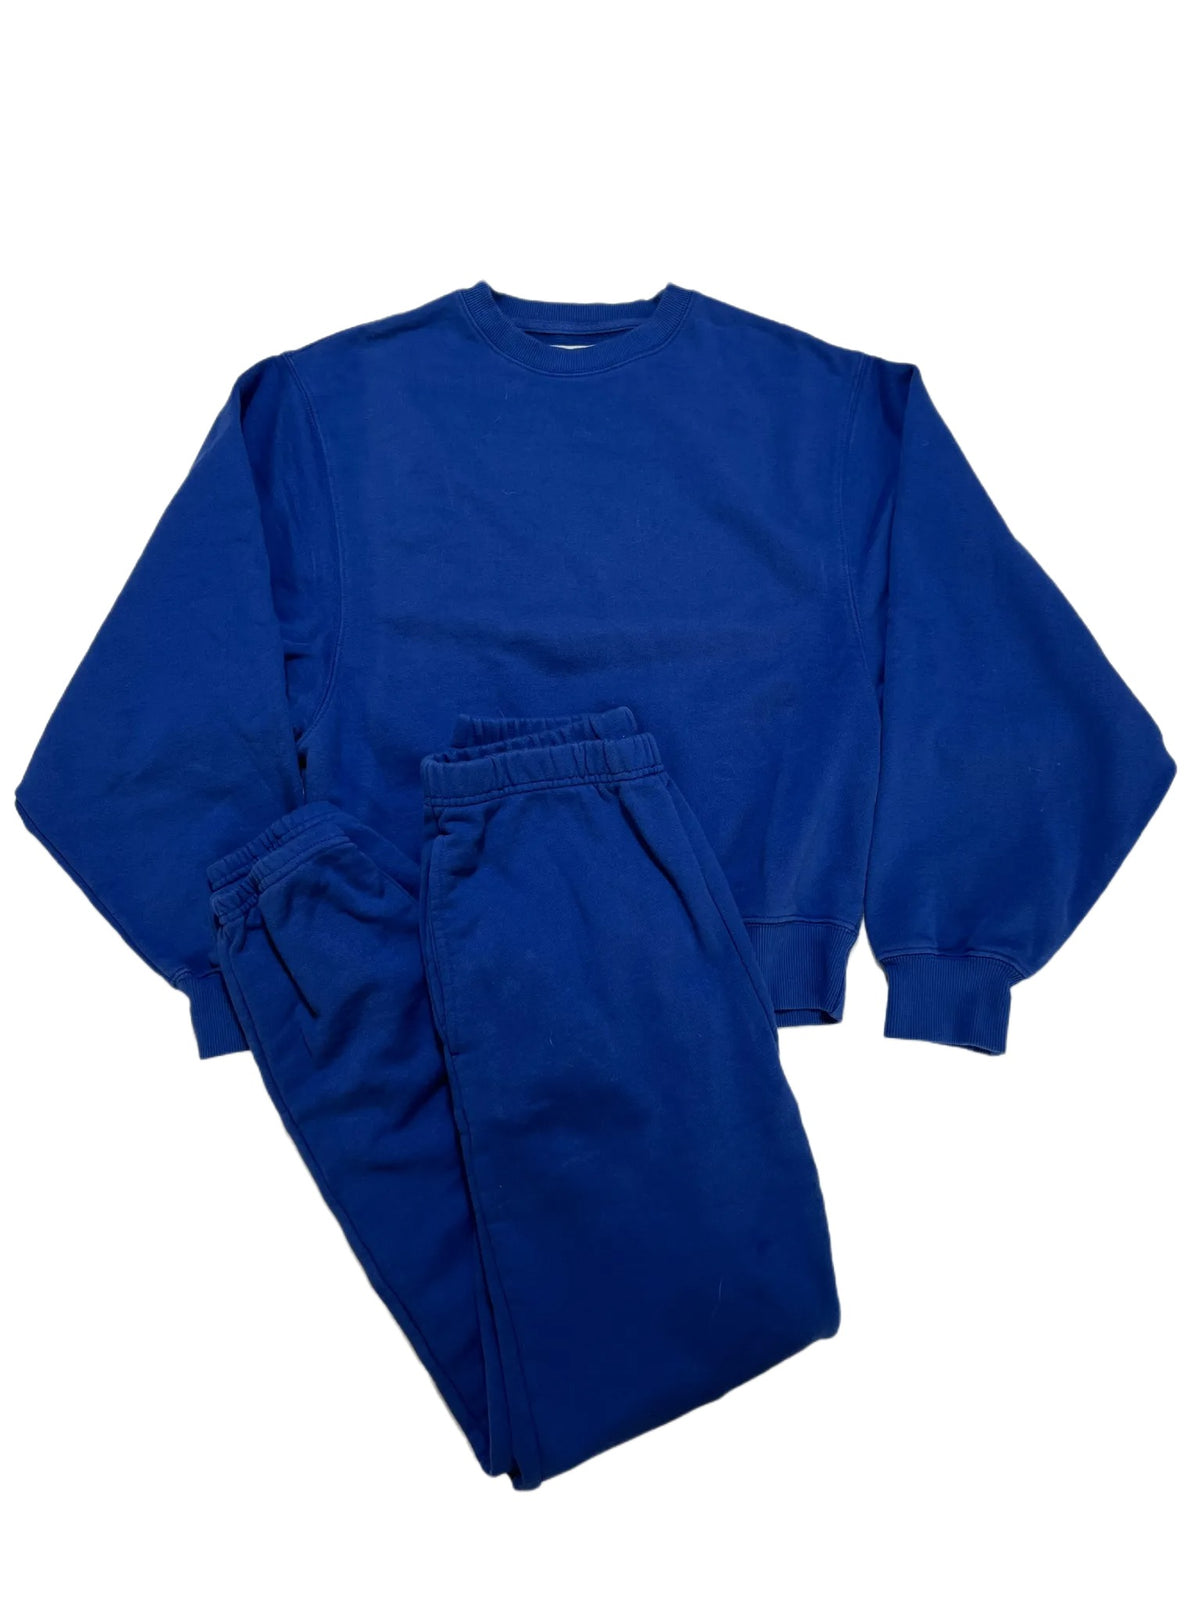 Brunette The Label- Blue Sweatsuit